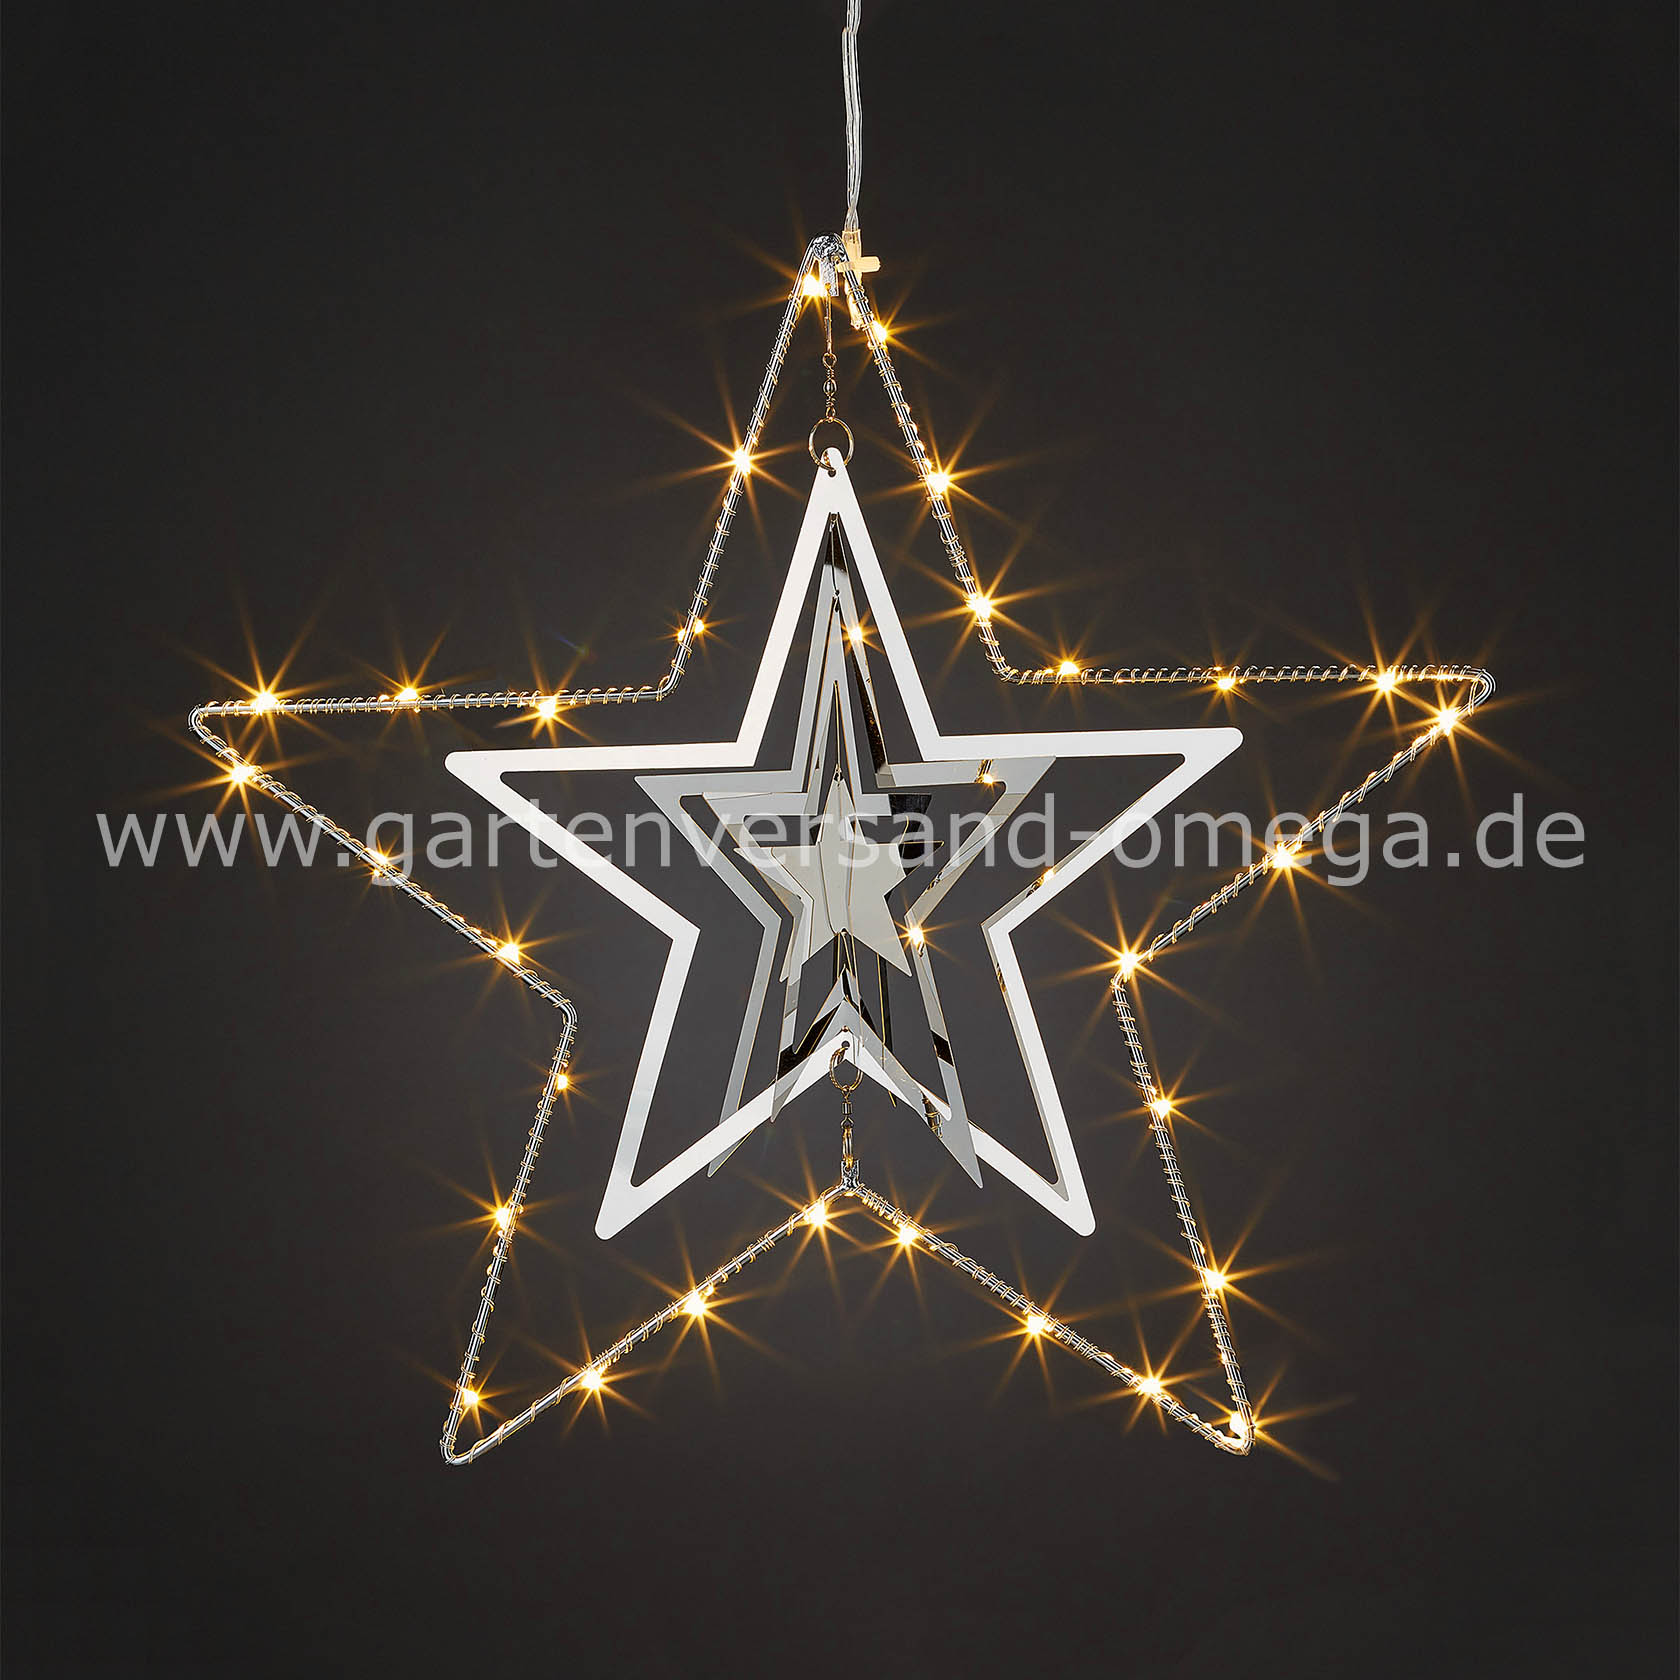 LED 3D Metall-Stern - Weihnachtsbeleuchtung für Innen, LED-Stern,  Weihnachtsdeko beleuchtet, Weihnachtsbeleuchtung zum Hängen, Stern aus  Metall, LED-Mobilee, Stern-Mobilee, Weihnachtsstern, Deko-Weihnachtsstern